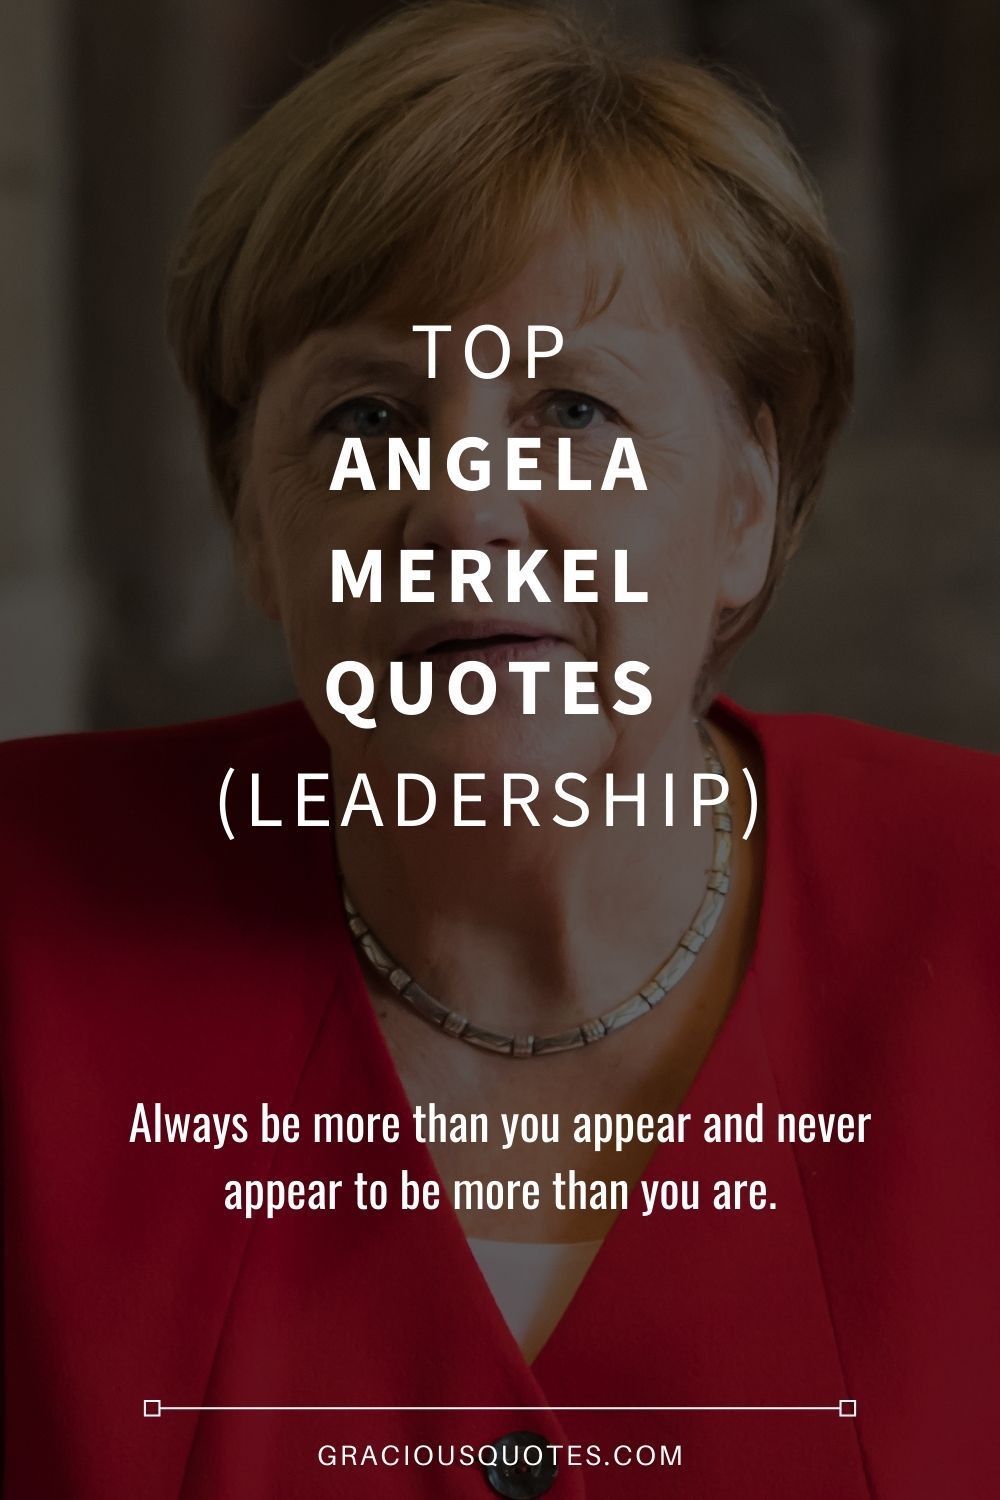 Top Angela Merkel Quotes (LEADERSHIP) - Gracious Quotes